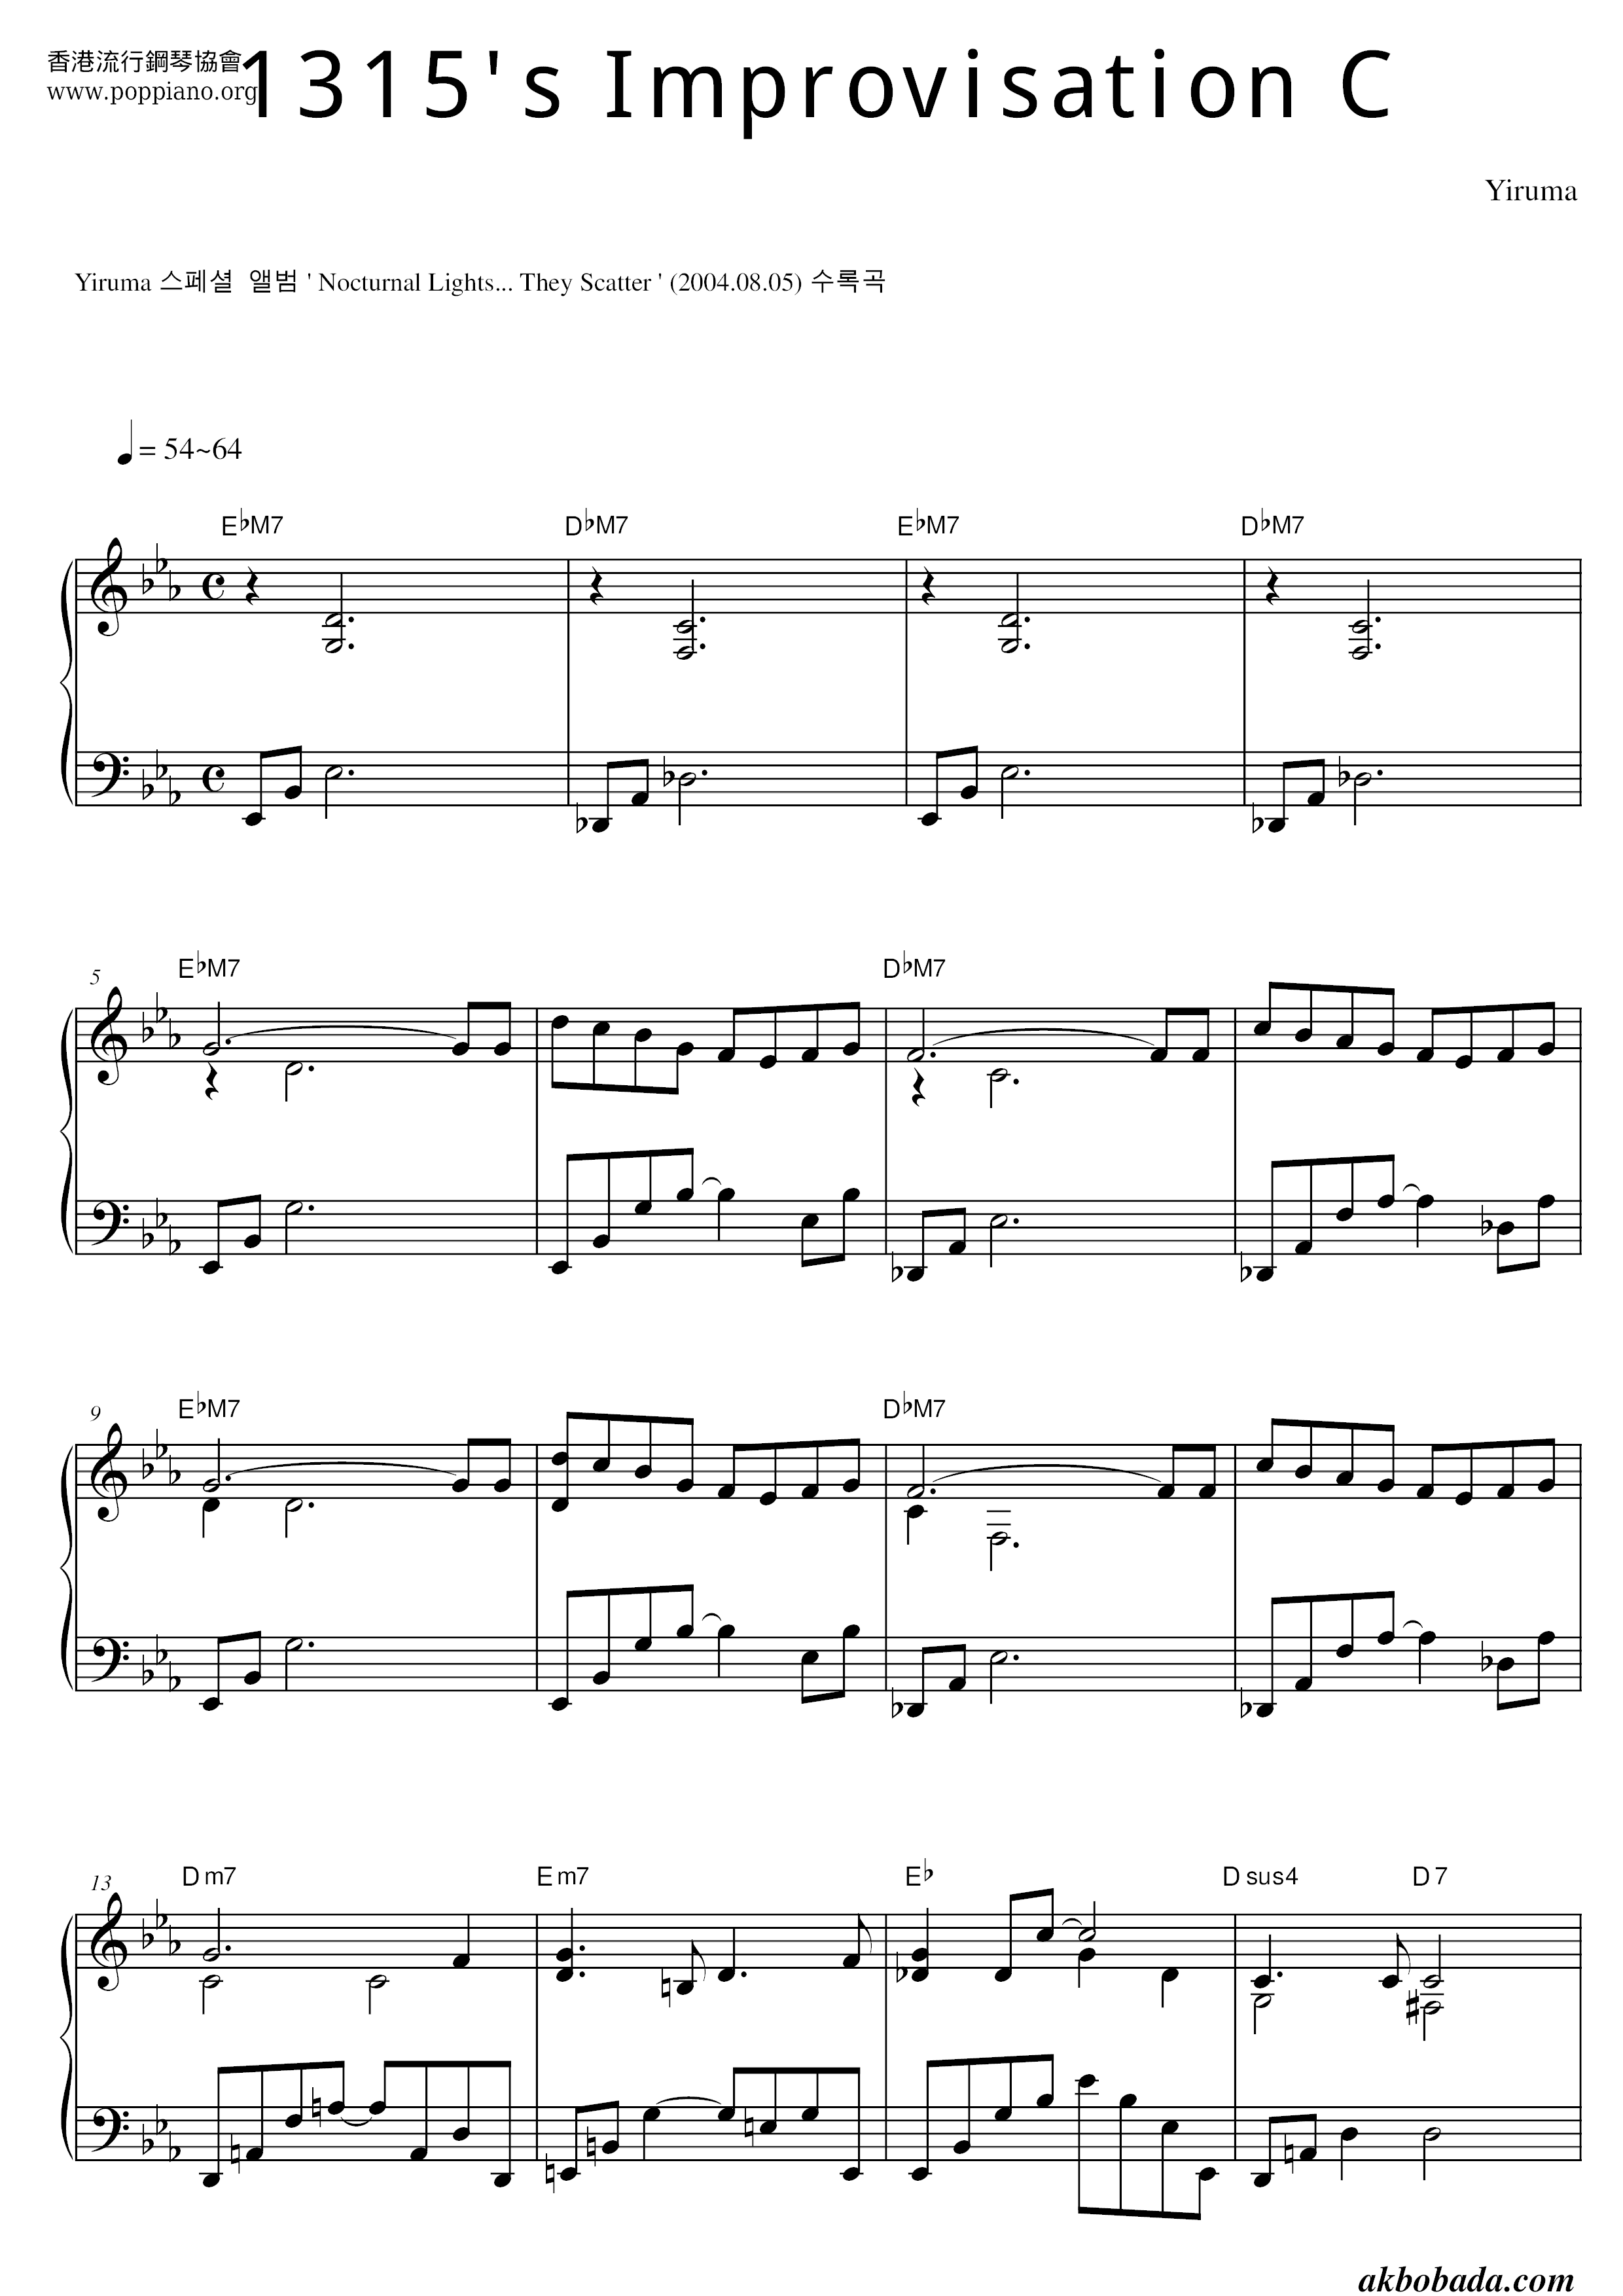 1315's Improvisation C Score